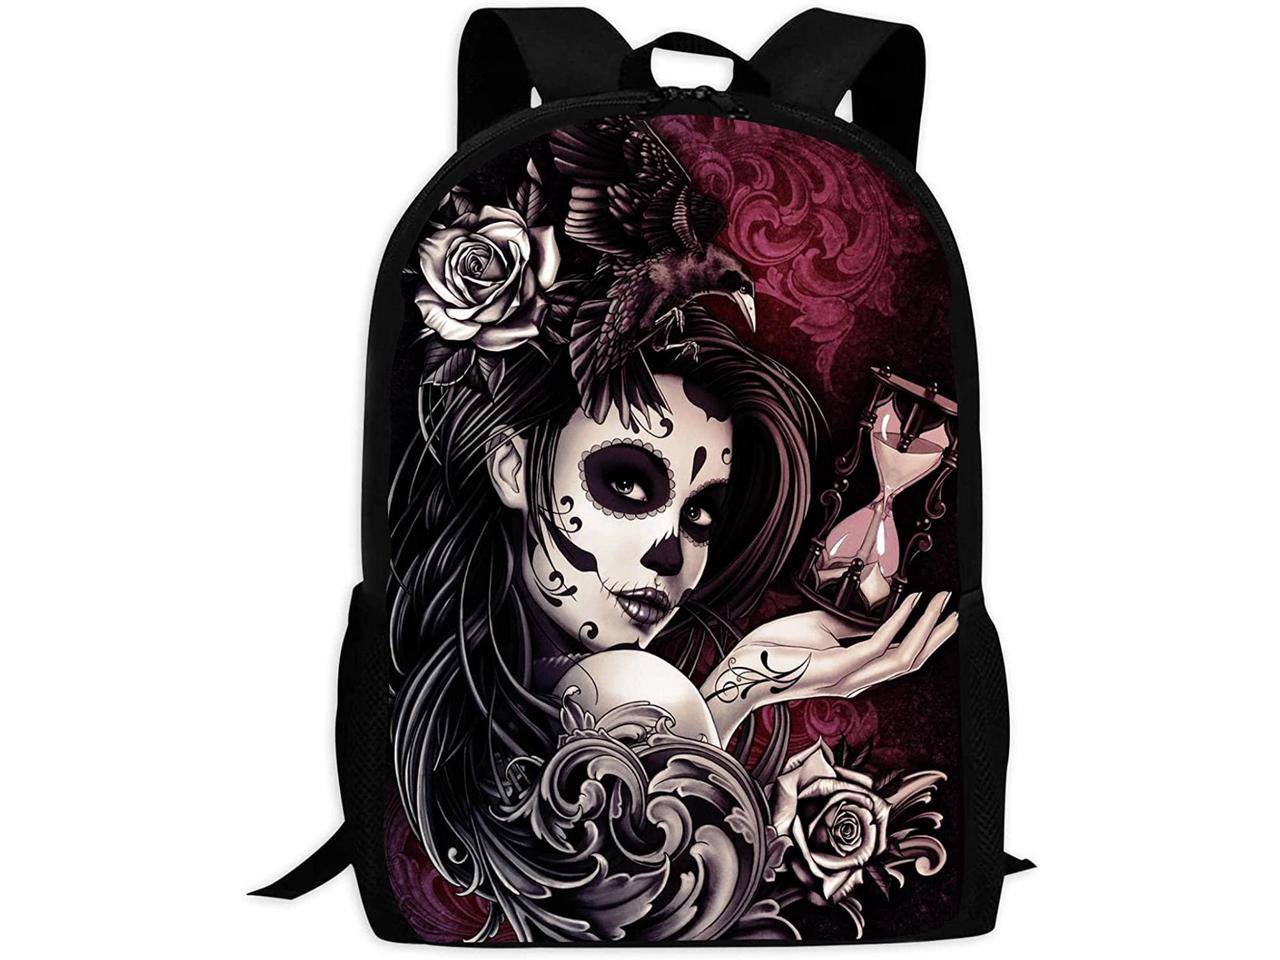 Zombie Art School Backpack Laptop Backpacks Casual Bookbags Daypack for Student Girls Boys